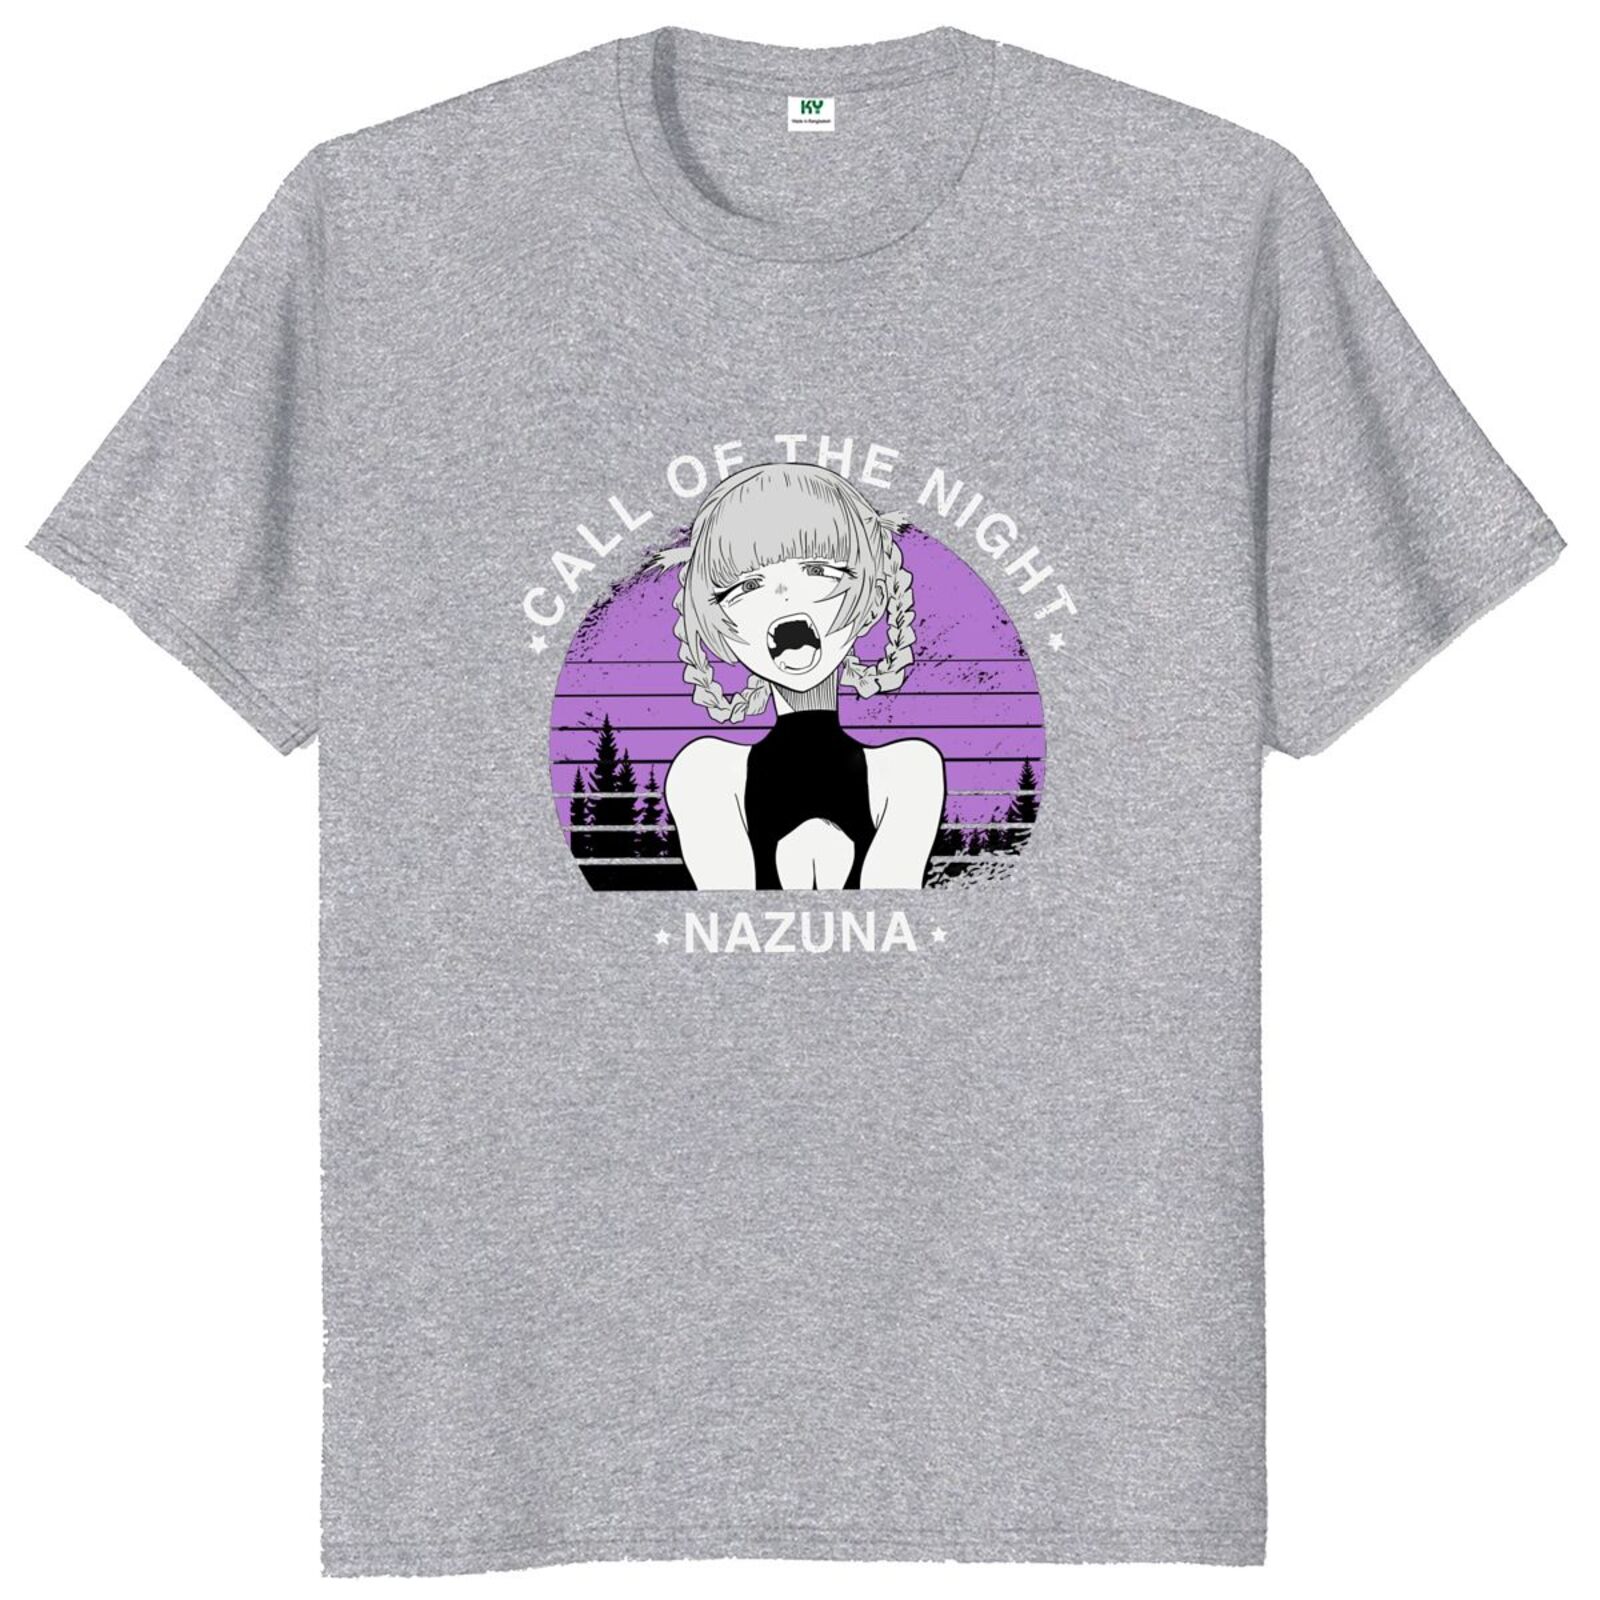 Call Of The Night – Nazuna Themed Badass T-Shirts (7 Designs) T-Shirts & Tank Tops